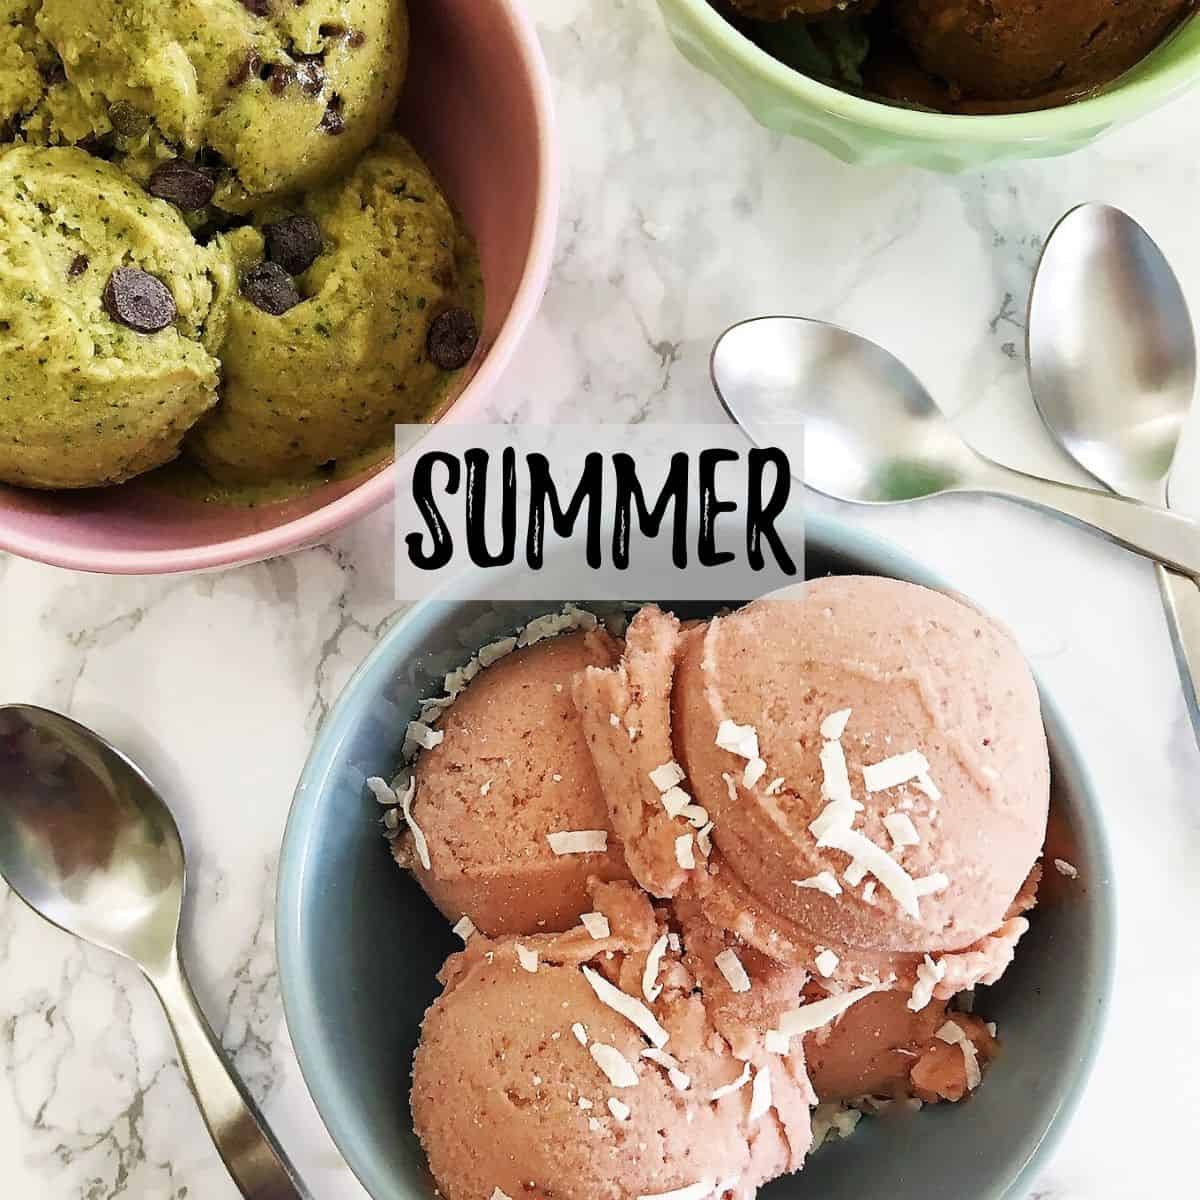 Summer Recipes